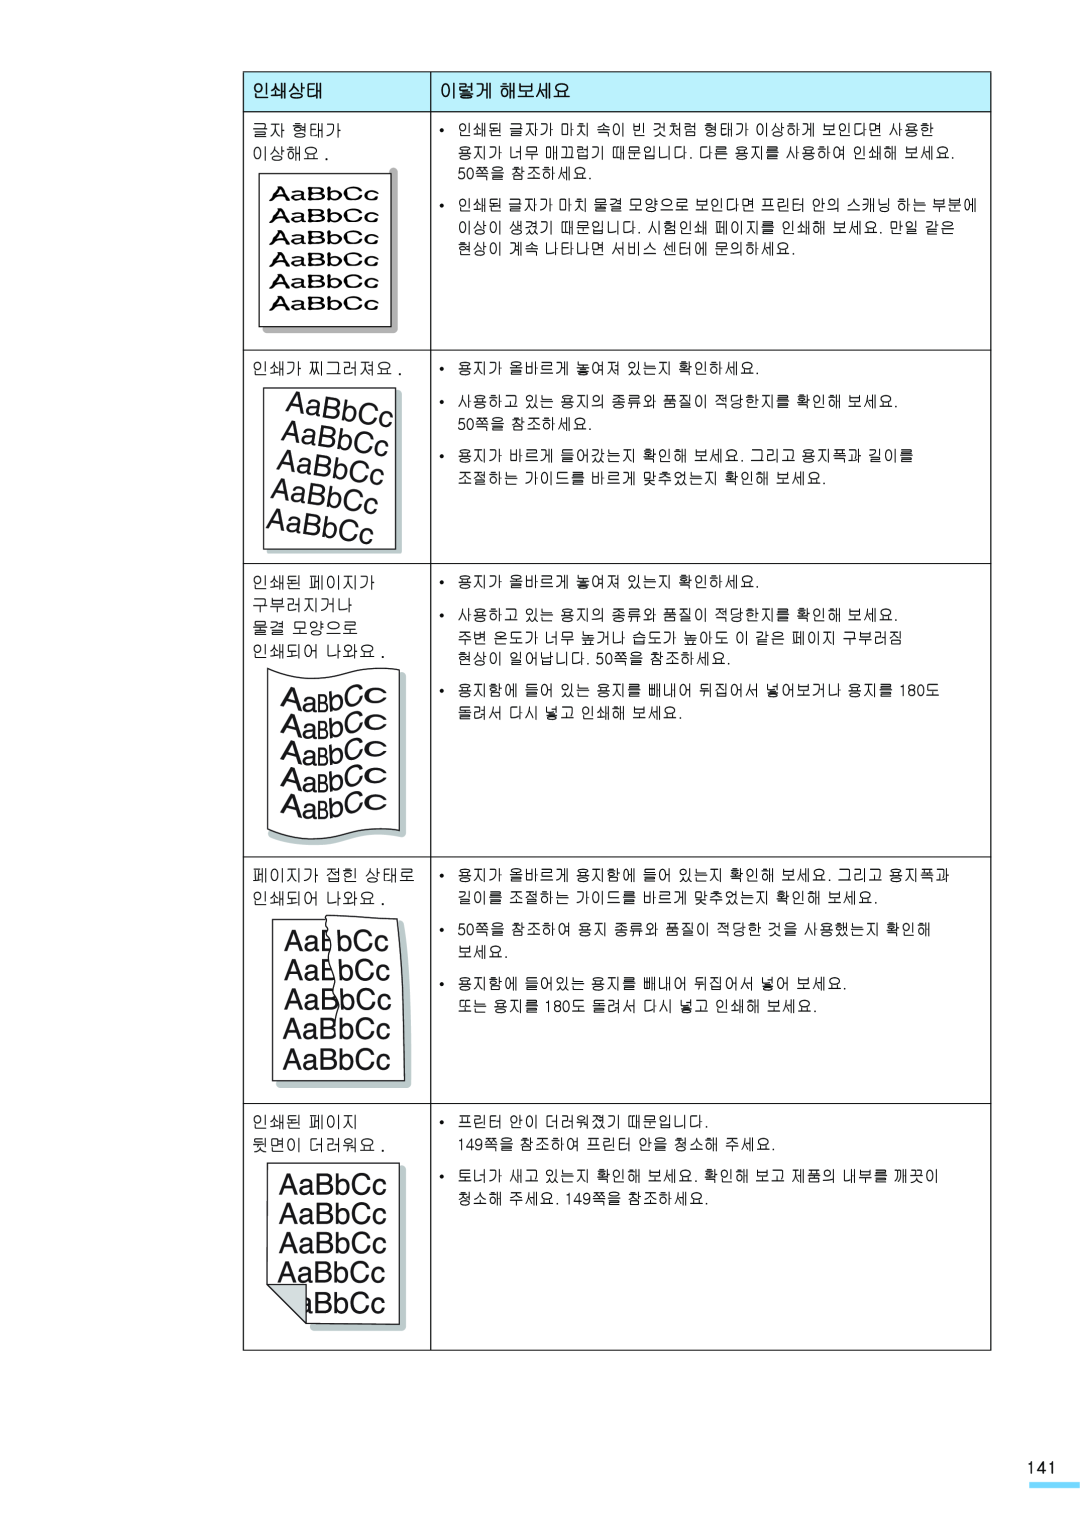 Samsung ML-2571N manual AaBbCc AaBbCc AaBbCc AaBbCc AaBbCc, 인쇄상태, 이렇게 해보세요, 용지가 너무 매끄럽기 때문입니다. 다른 용지를 사용하여 인쇄해 보세요 